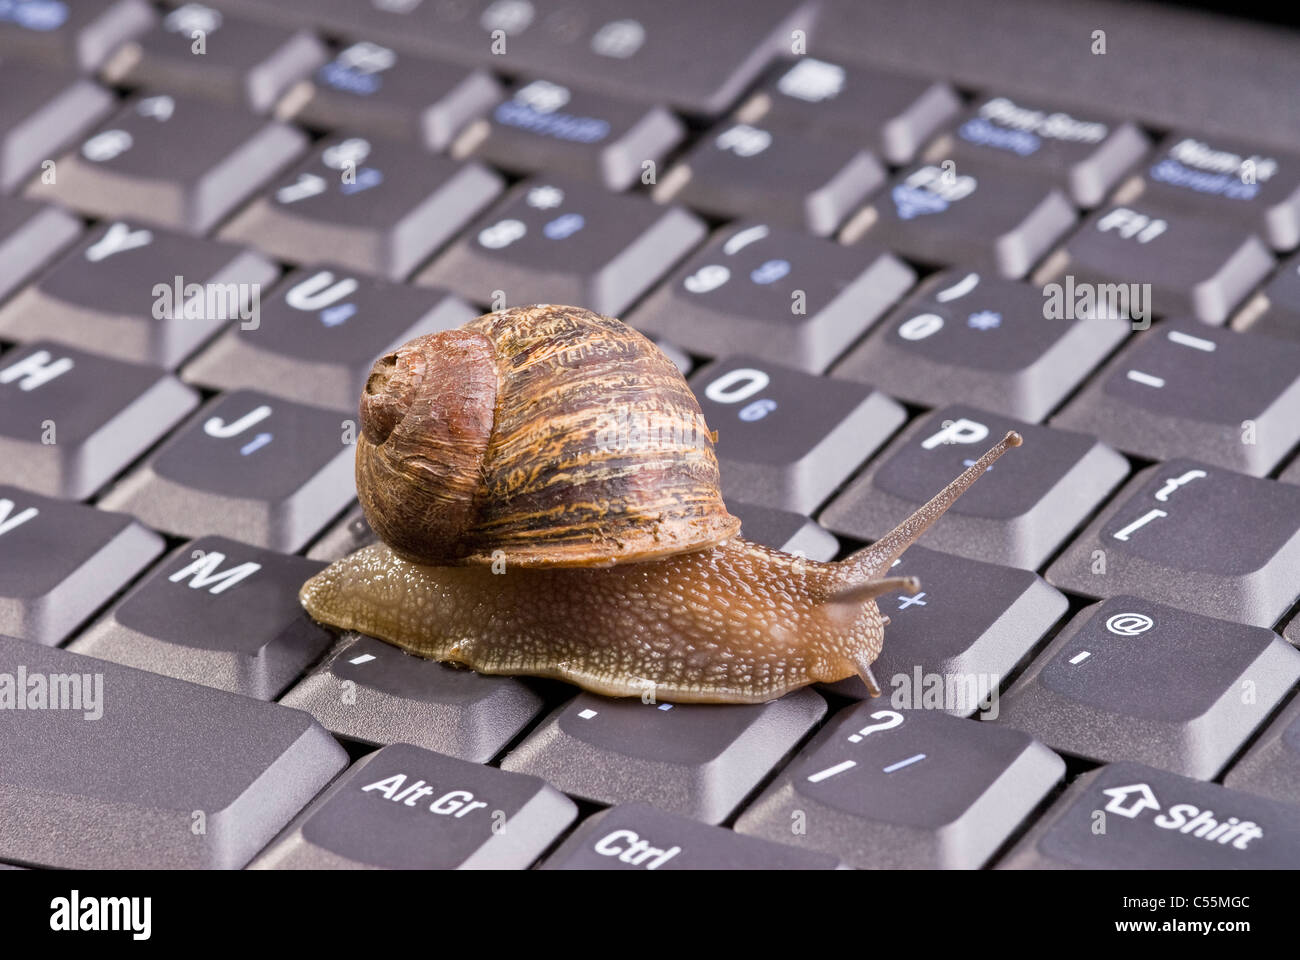 common-brown-snail-on-computer-keyboard-C55MGC.jpg